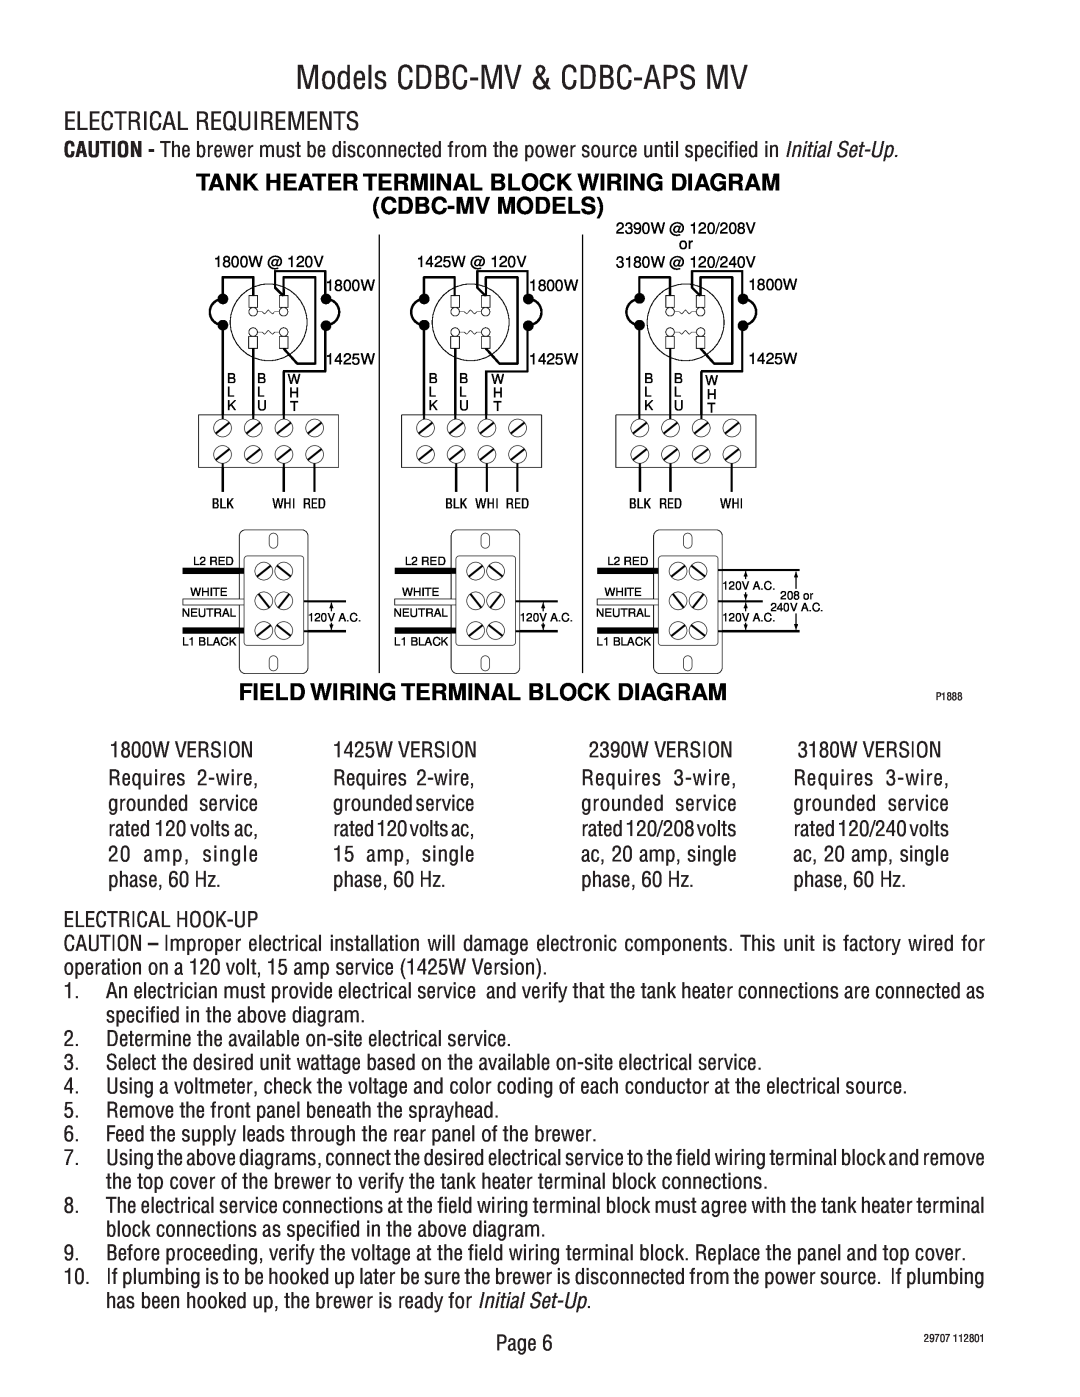 Bunn CDBCF-MV, CDBCF-DV Models CDBC-MV& CDBC-APSMV, Electrical Requirements, Tank Heater Terminal Block Wiring Diagram 